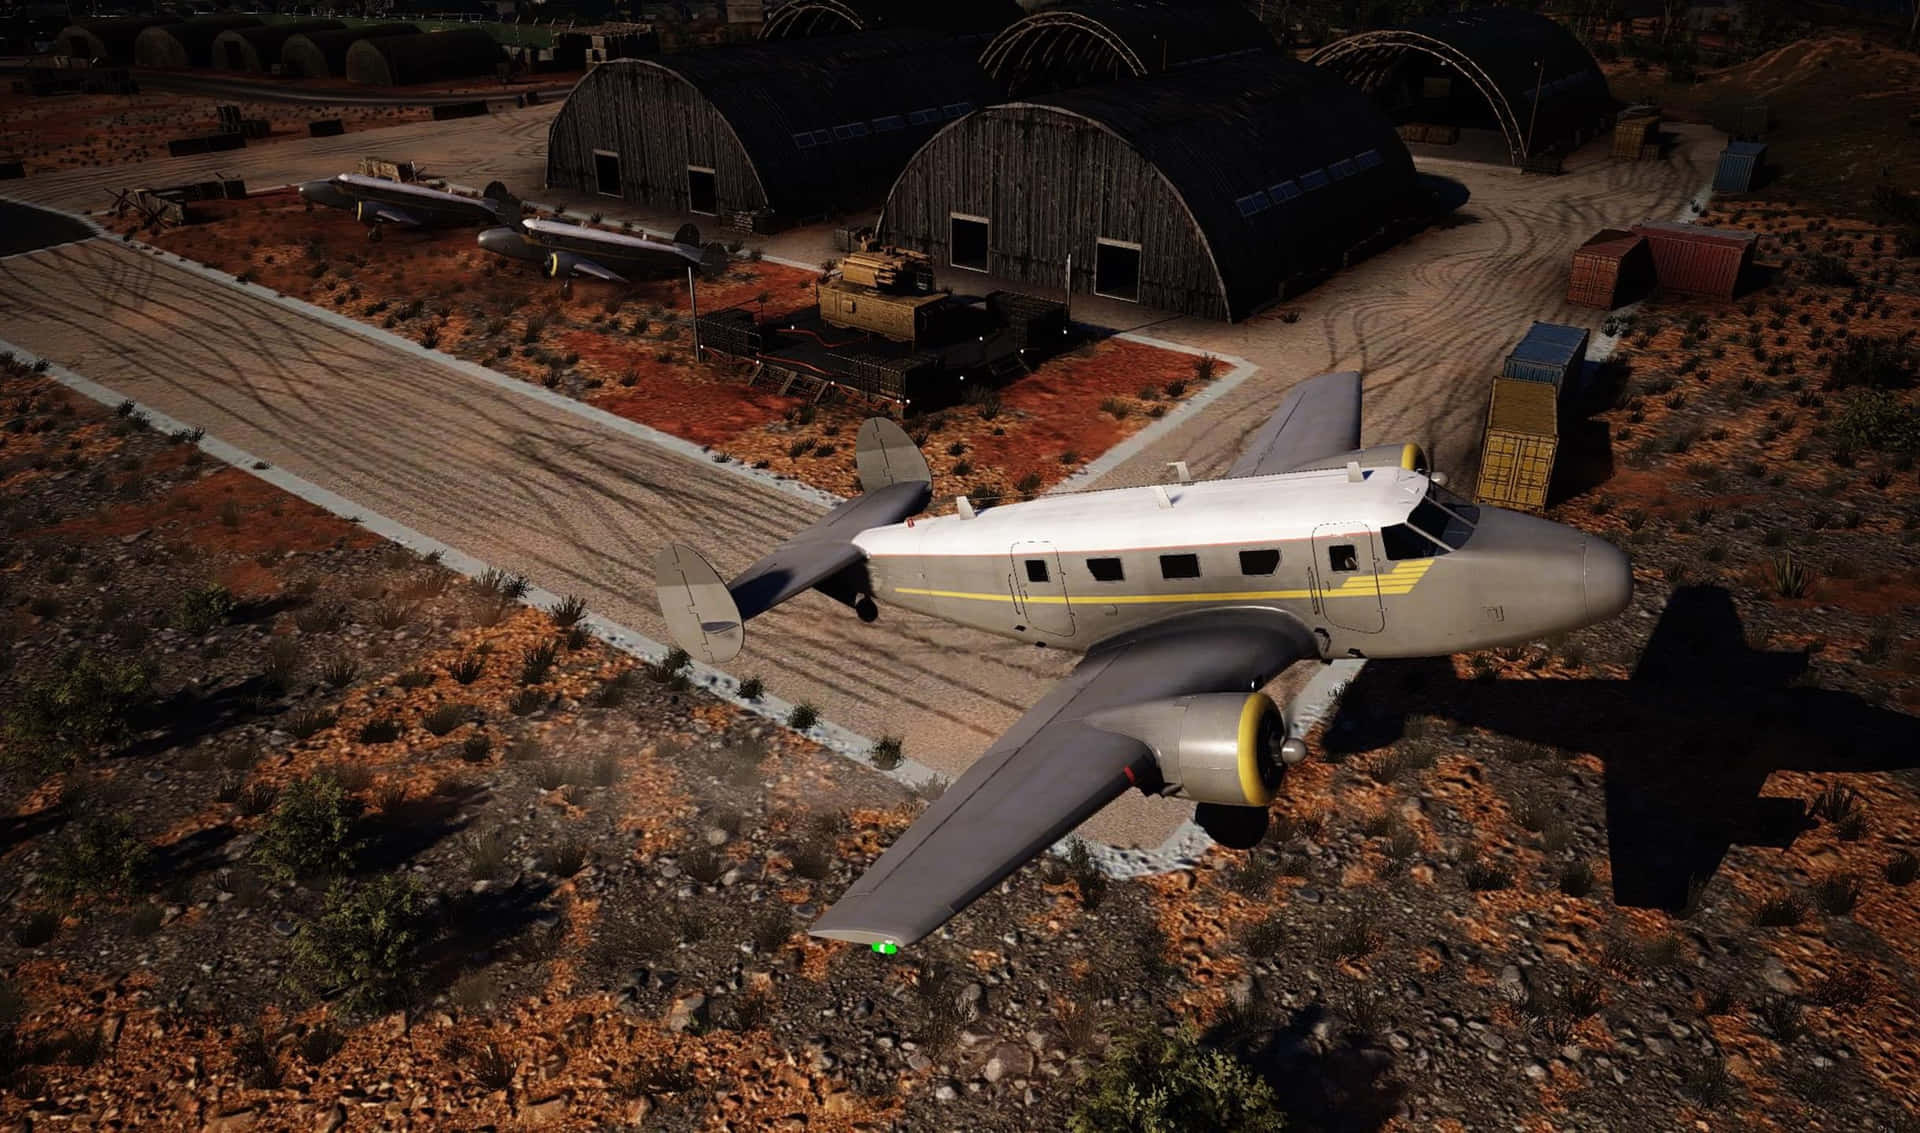 2440x1440 Ghost Recon Wildlands Airplane Taking Off Background